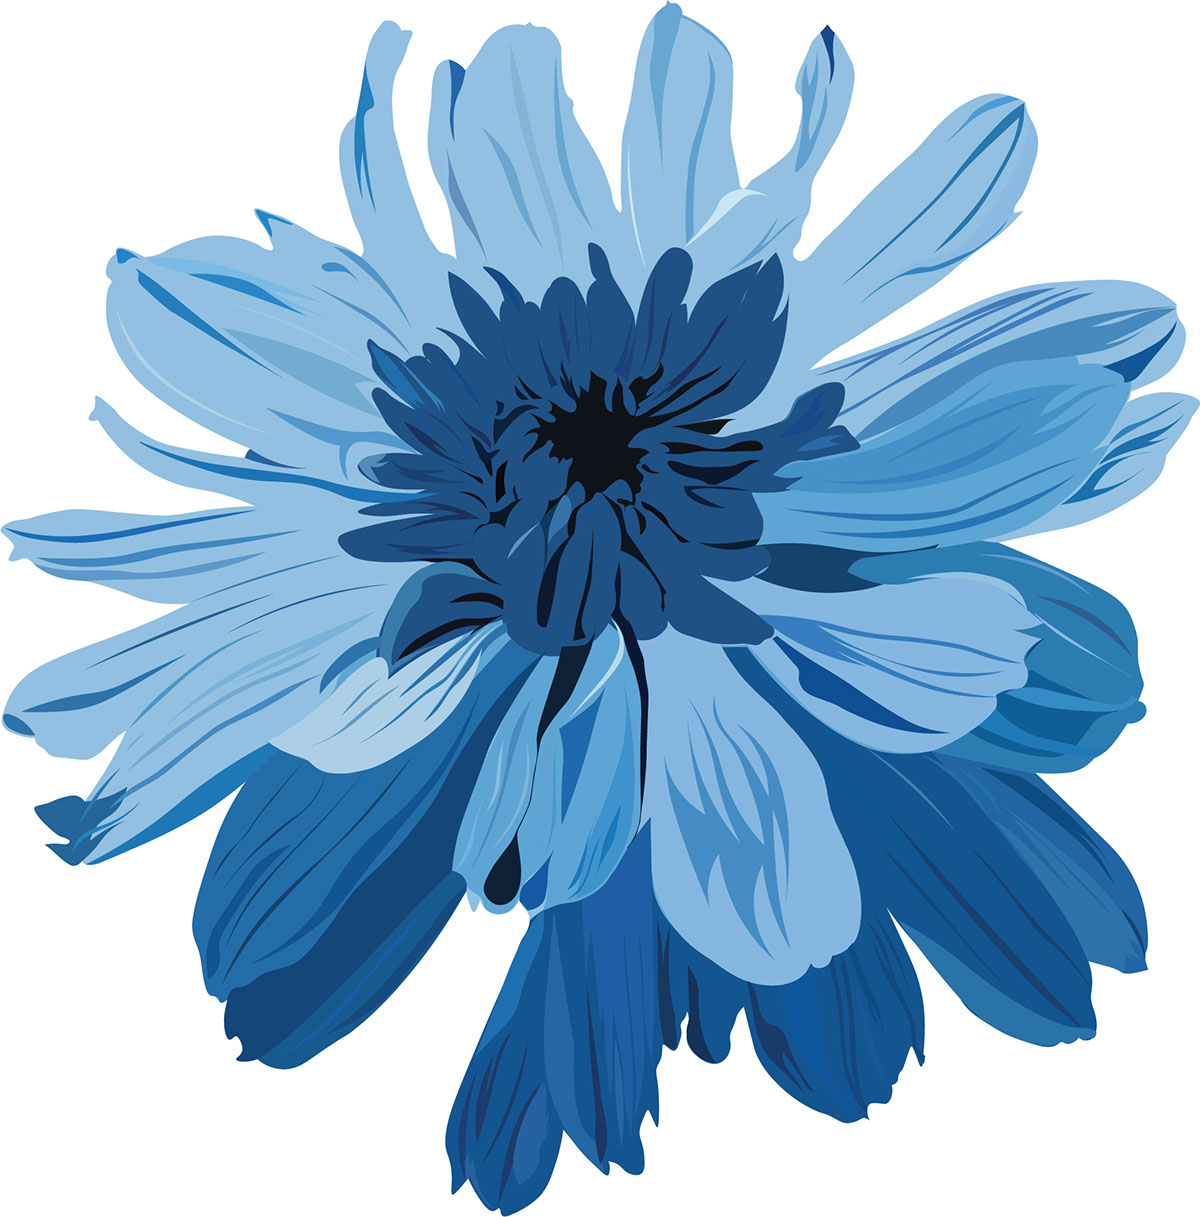 Blue Flower rendition image